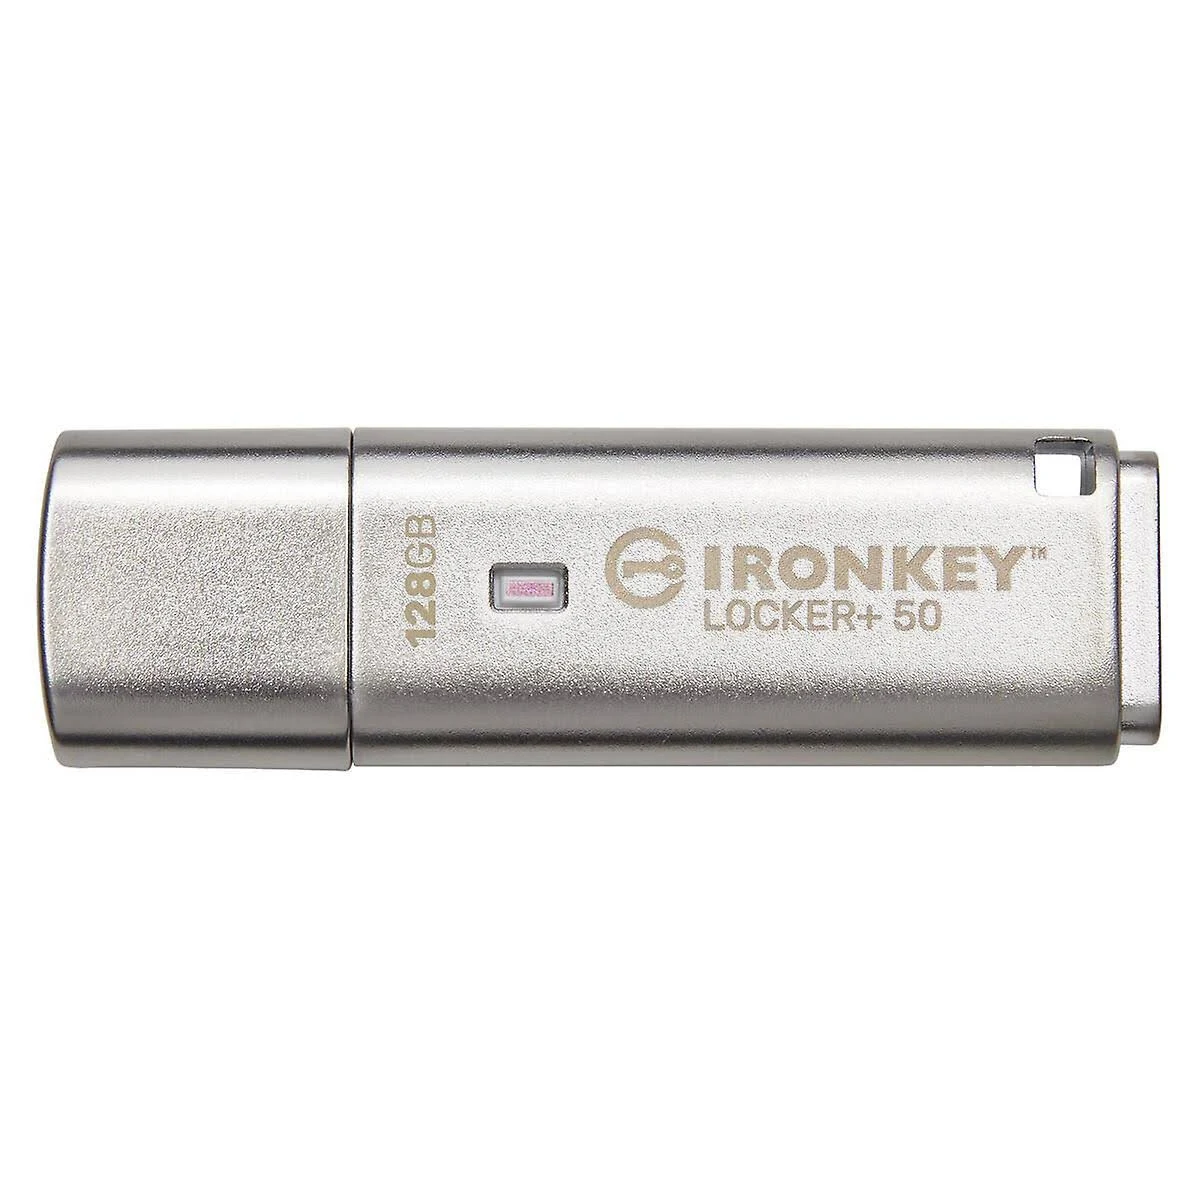 KINGSTON TECHNOLOGY IronKey Locker+ 50 Metall, GB) 128 USB-Flash-Laufwerk (Seilber